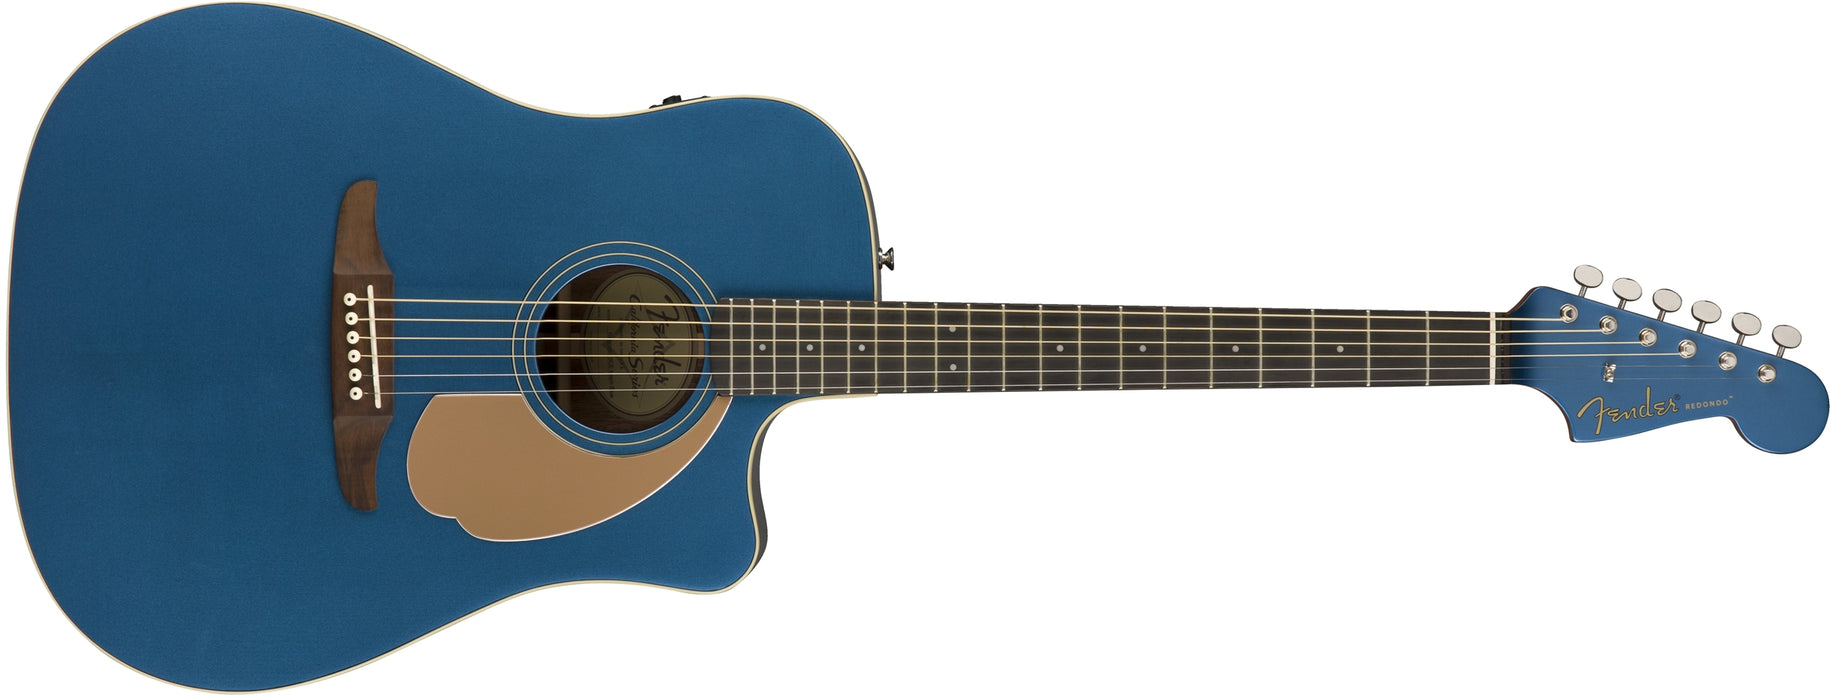 Fender Redondo Player Acoustic Electric Guitar - Belmont Blue